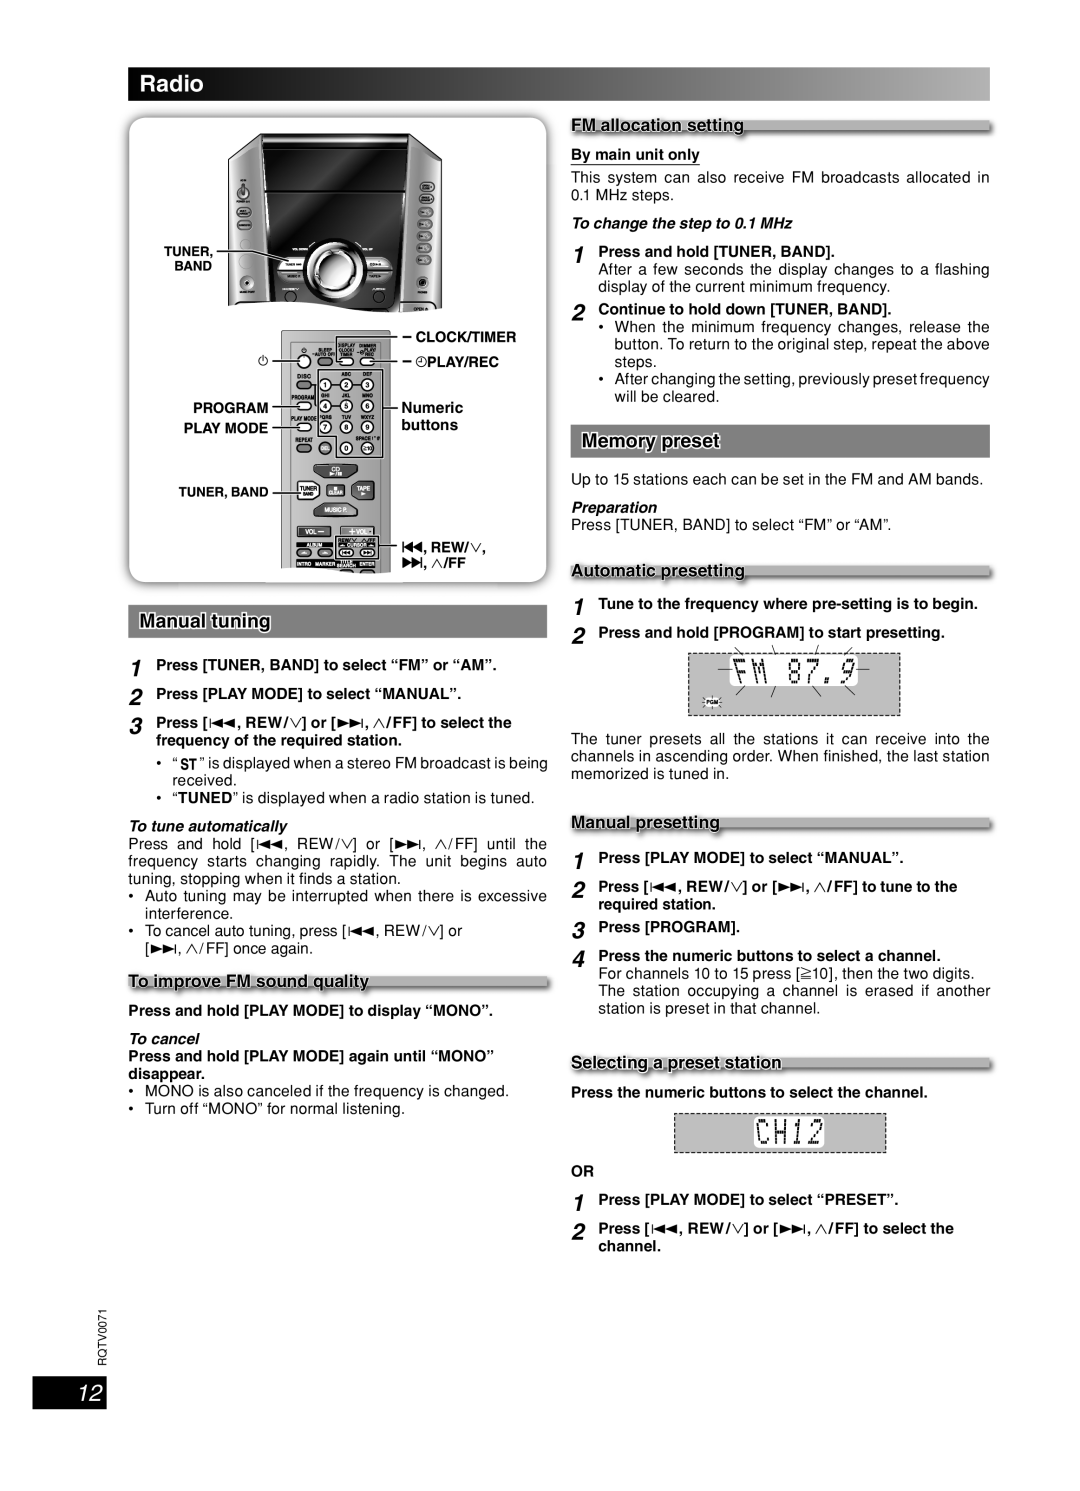 Panasonic SC-AK640 important safety instructions Radio, Manual tuning, Memory preset 